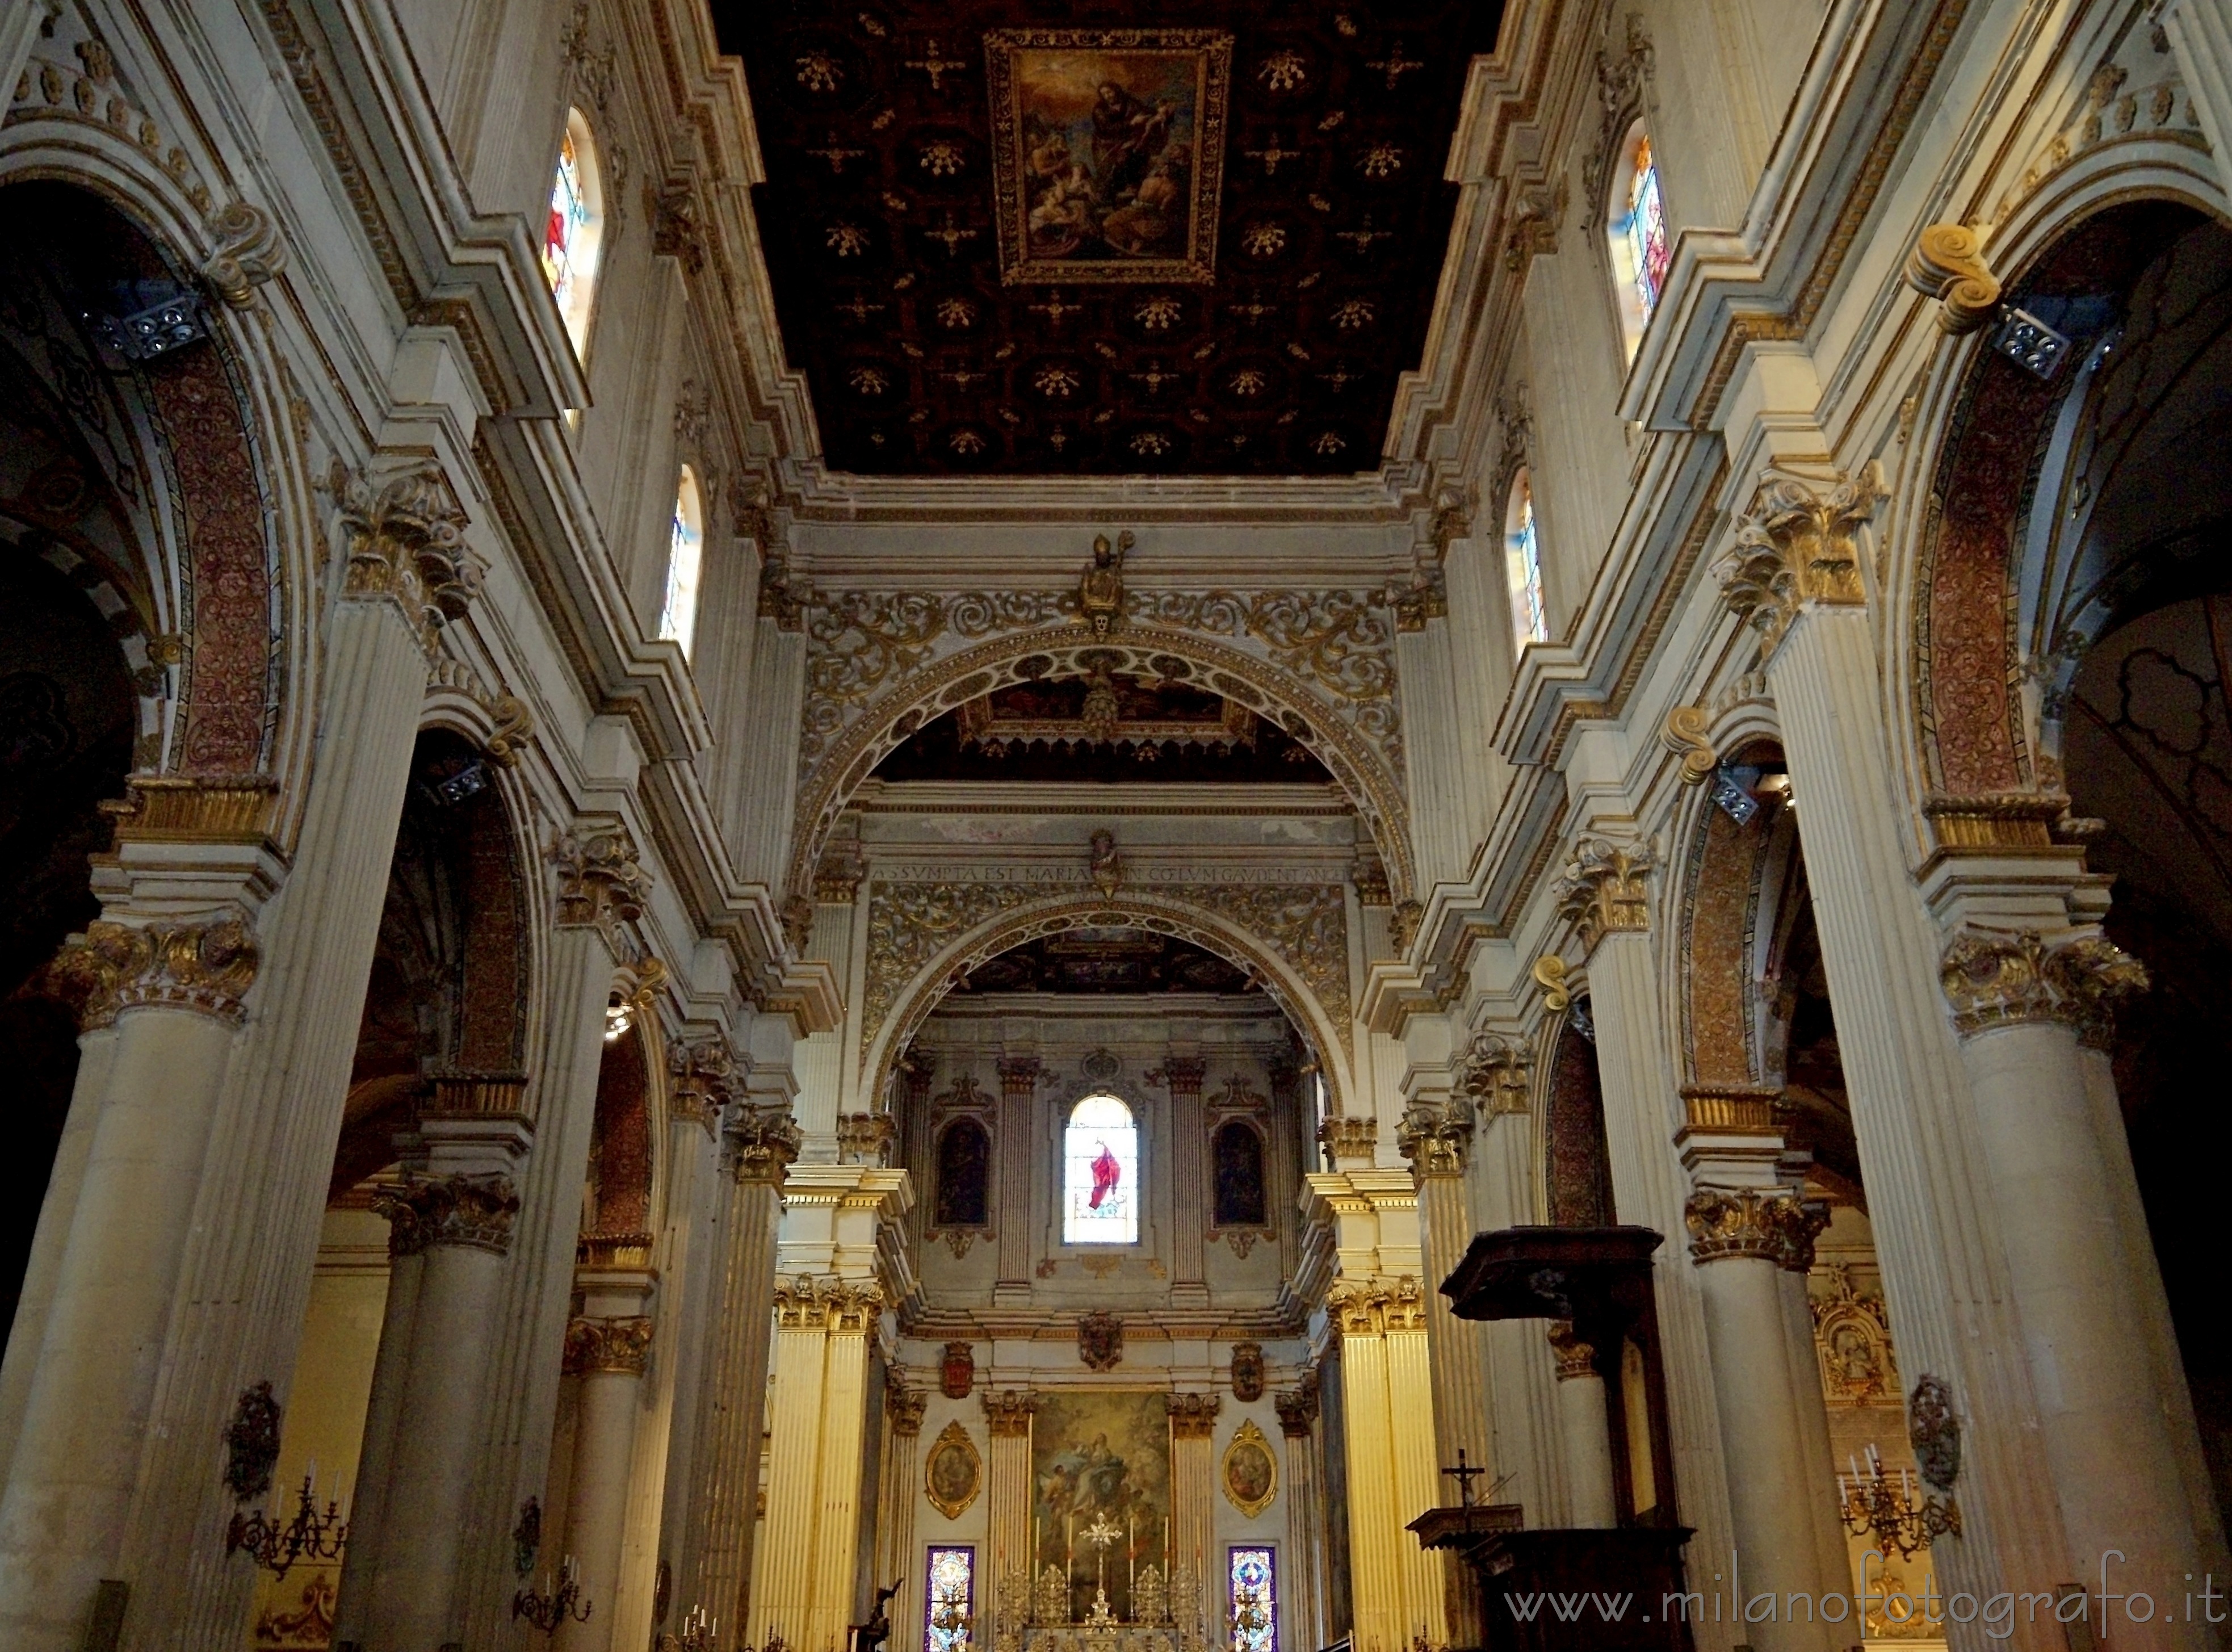 Lecce (Italy): Interiors of the Duomo - Lecce (Italy)